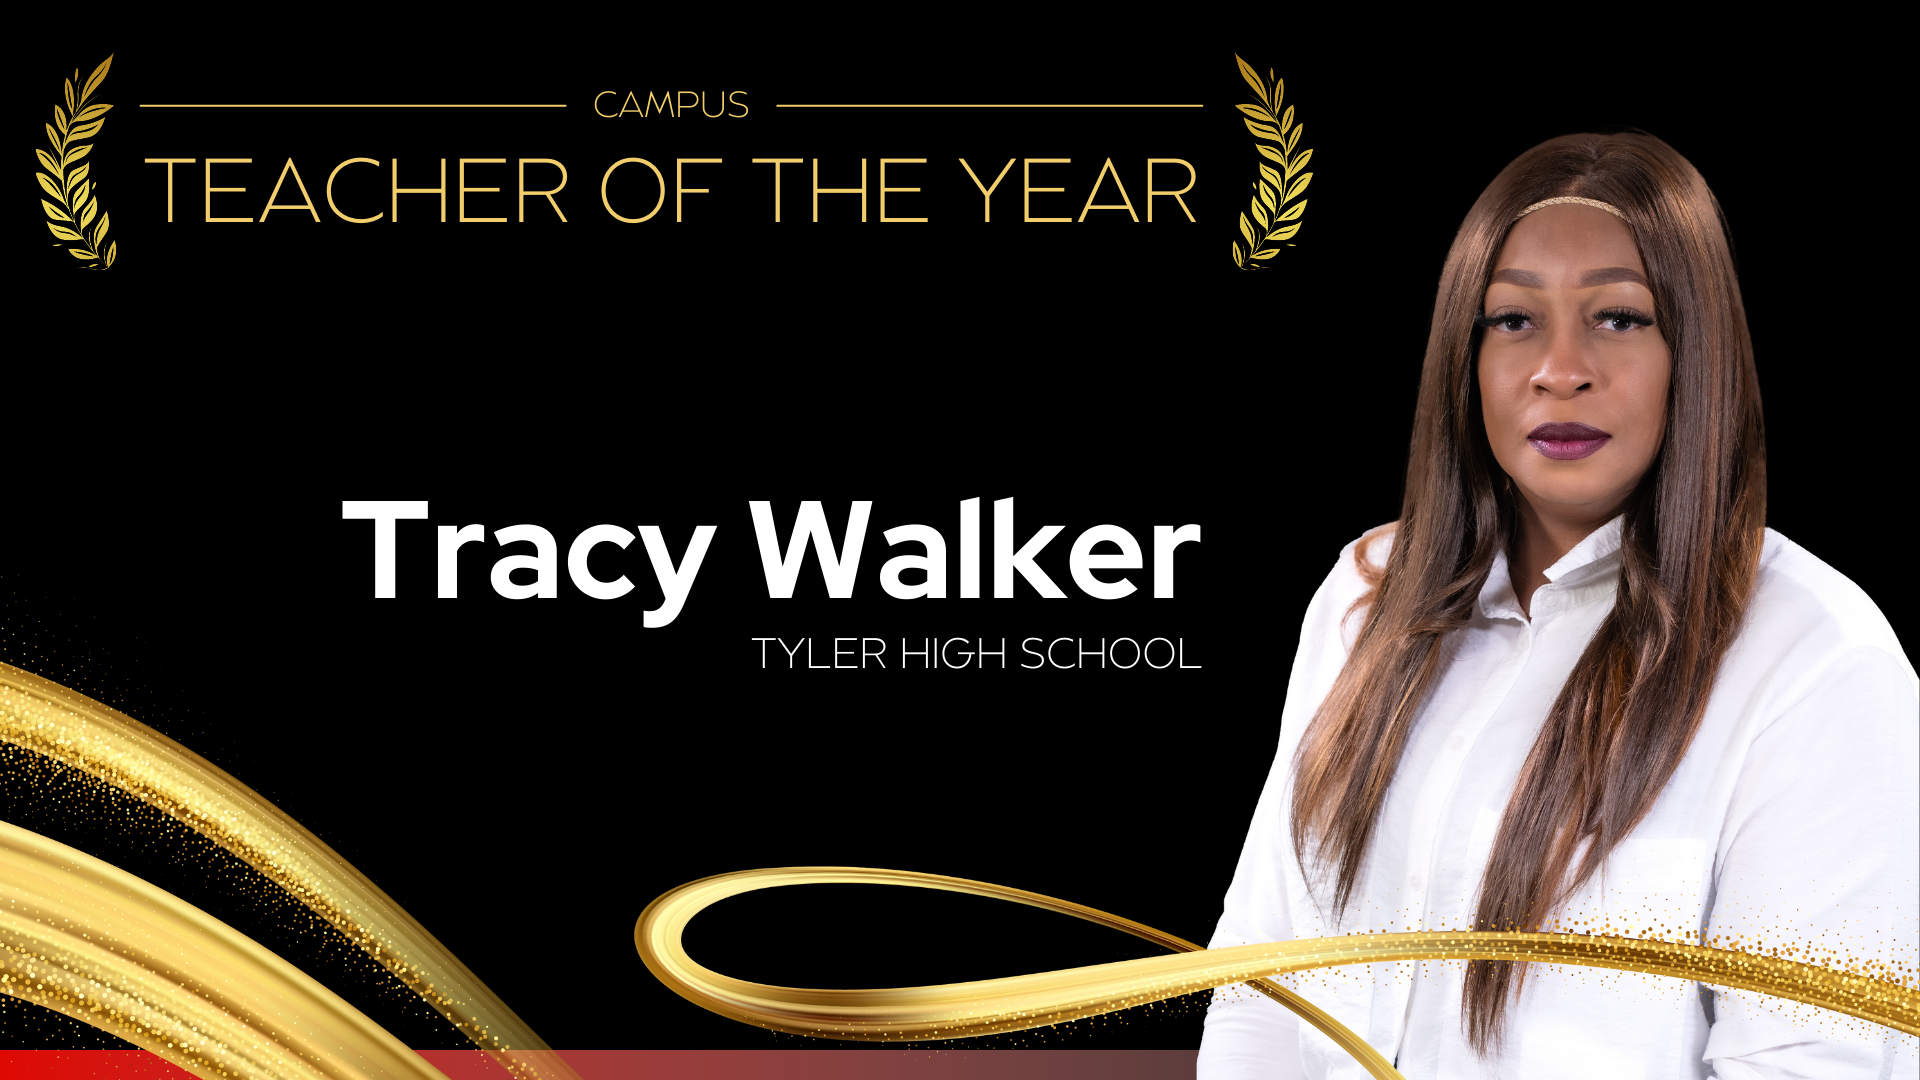 Campus Teacher of the Year Tyler High School - Tracy Walker